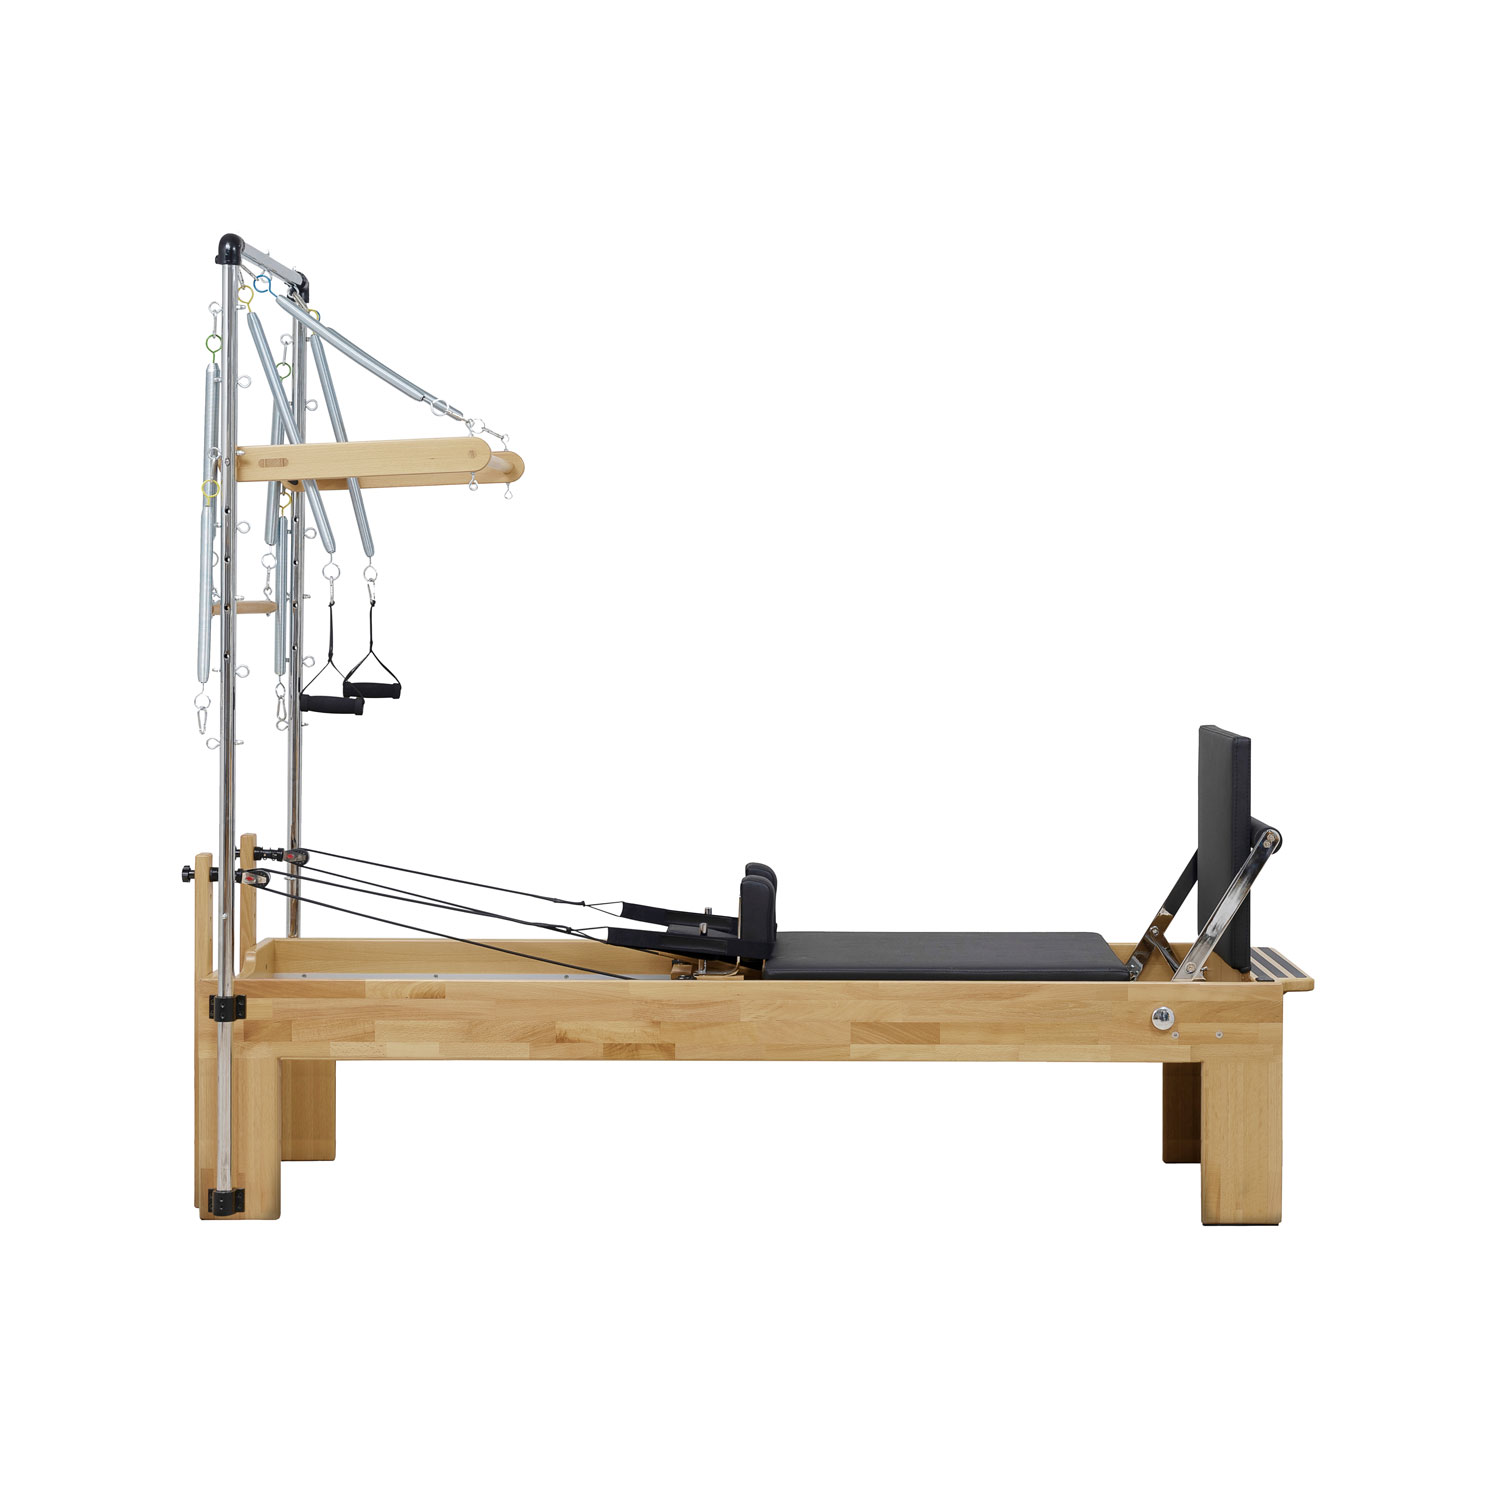 Clinical Pilates Reformer – Clinical Pilates Equipment